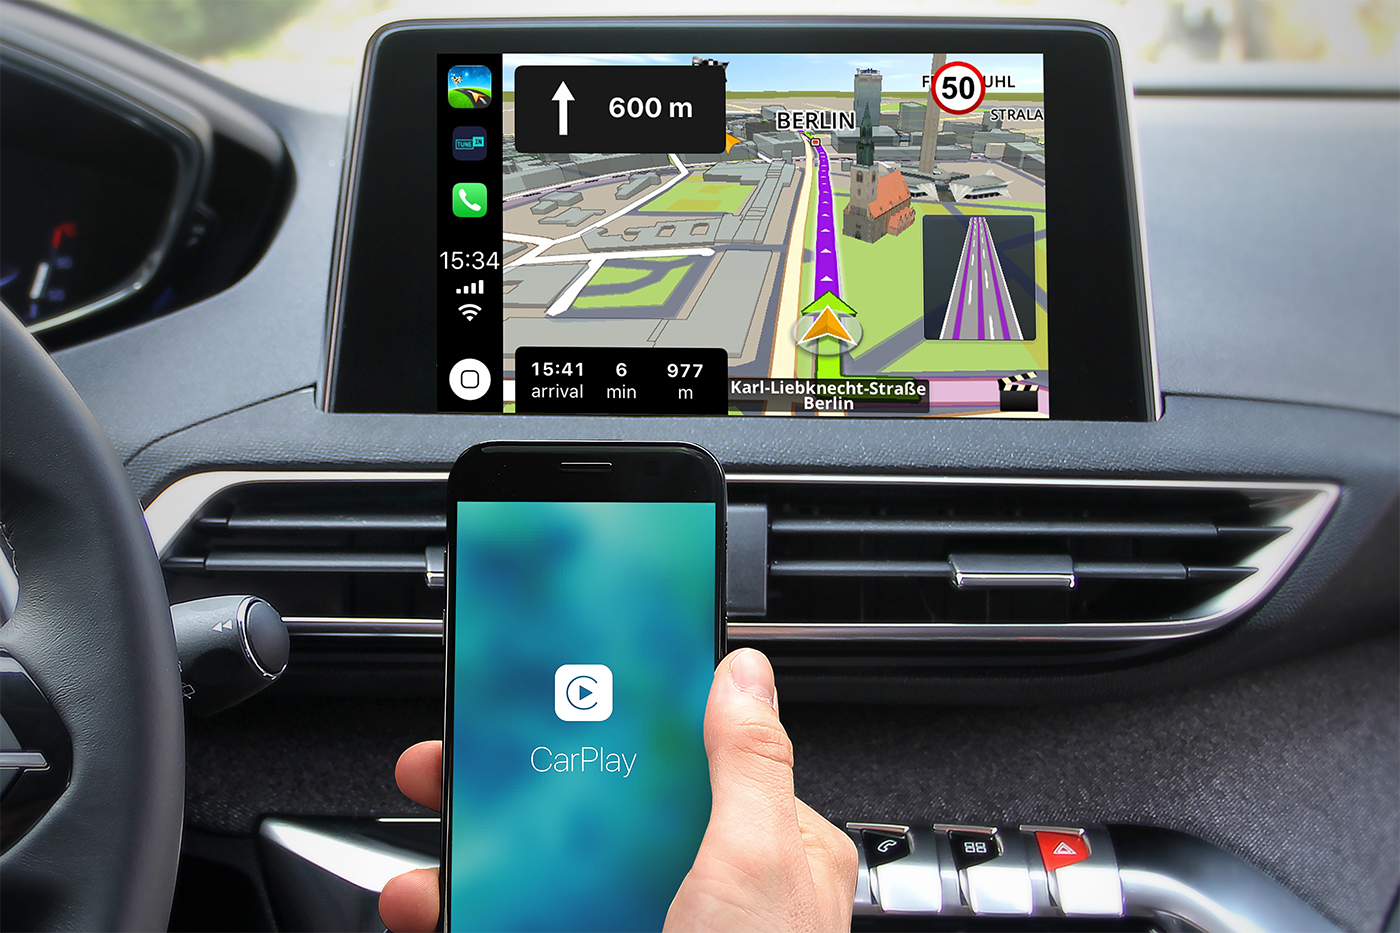 Sygic Upgrades Offline Navigation App with CarPlay Support